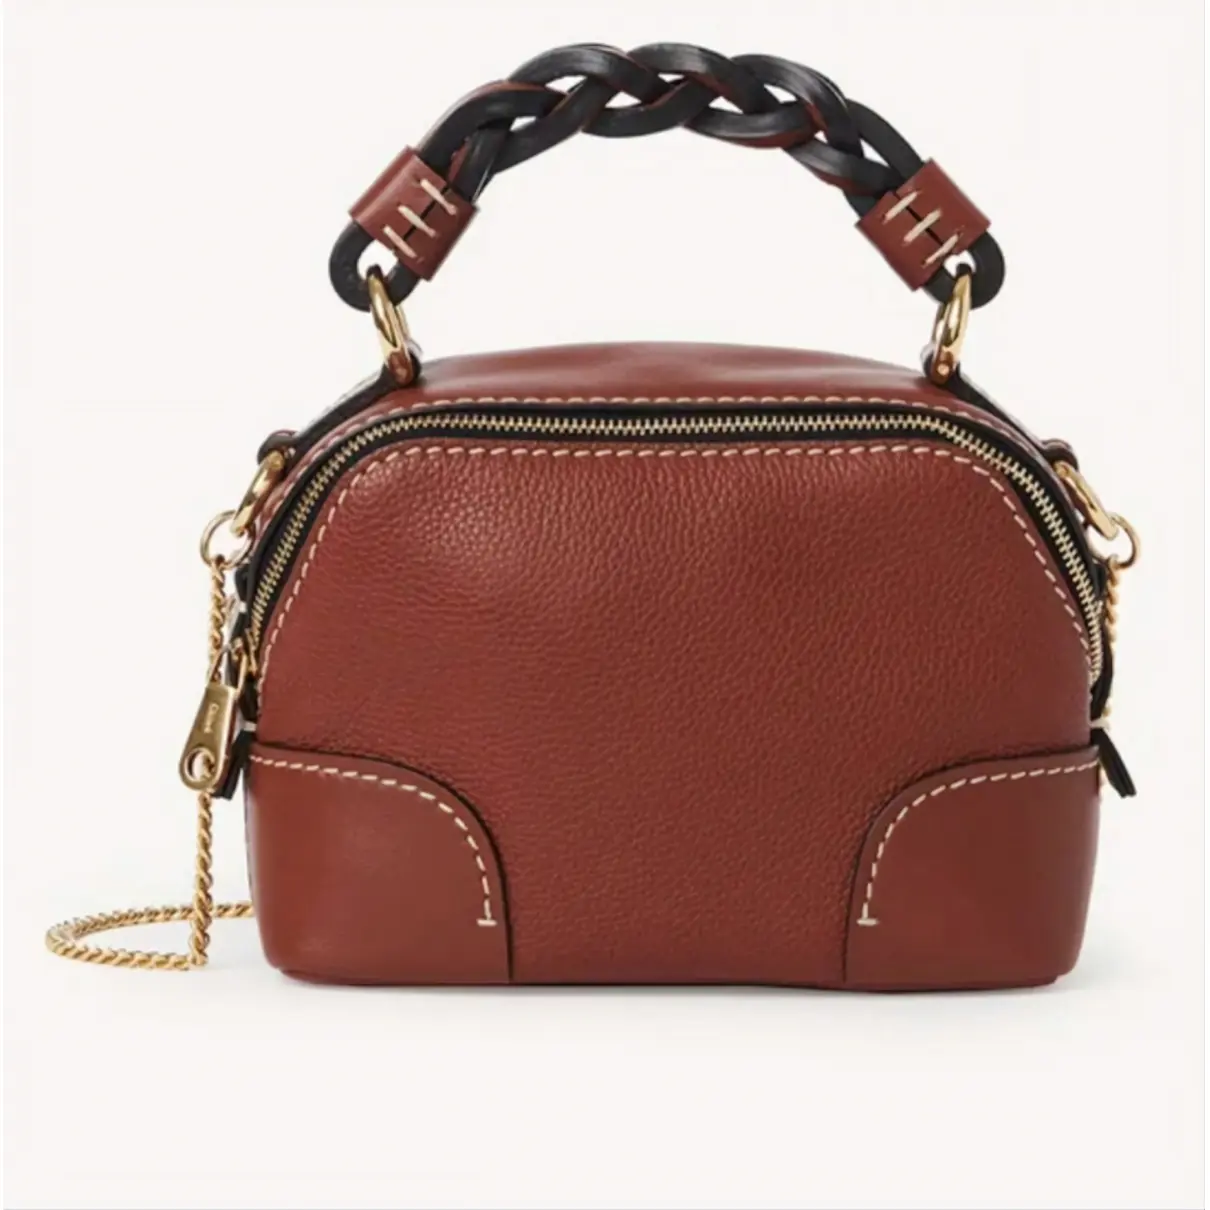 Buy Chloé Daria leather handbag online